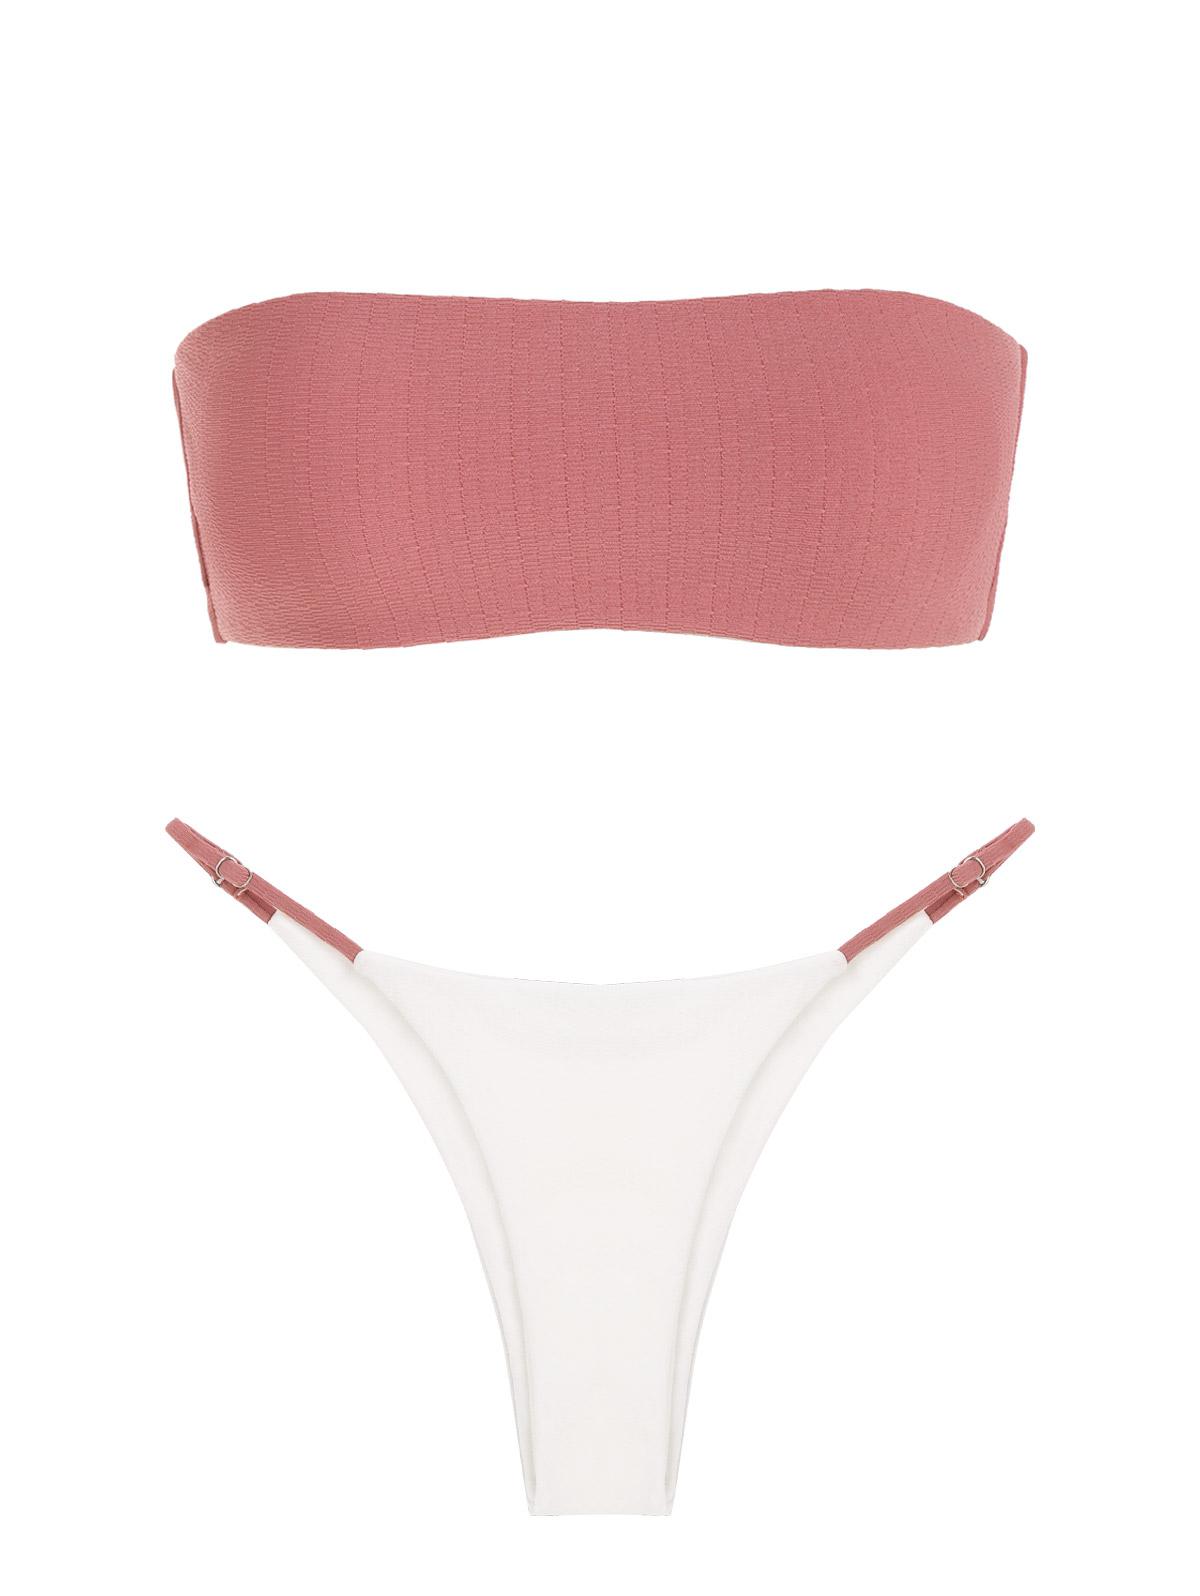 ZAFUL Textured Two Tone Tube String Bikini Swimwear M Light pink